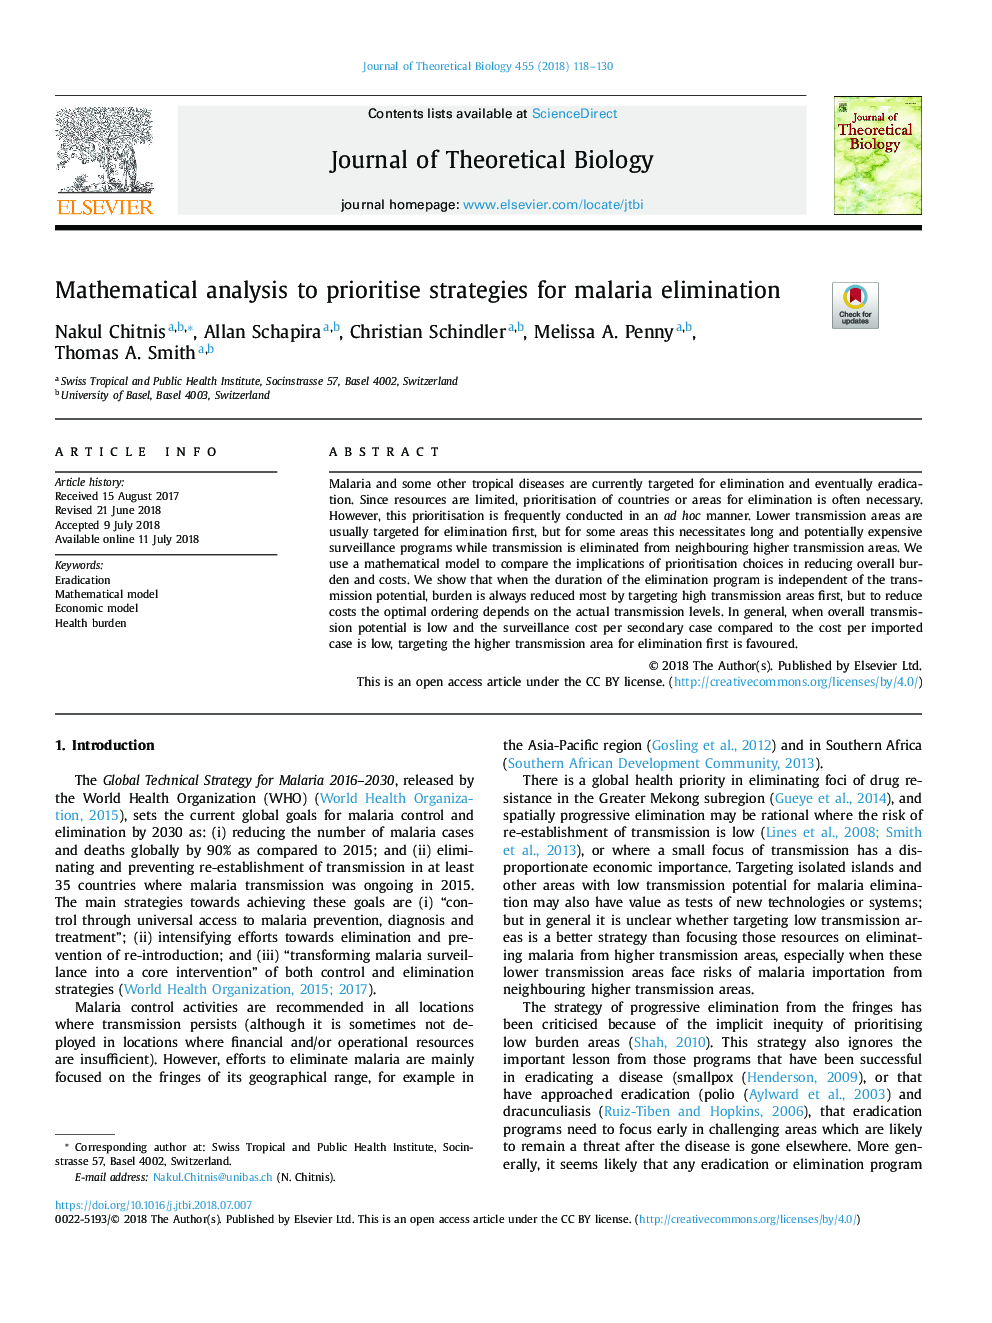 Mathematical analysis to prioritise strategies for malaria elimination